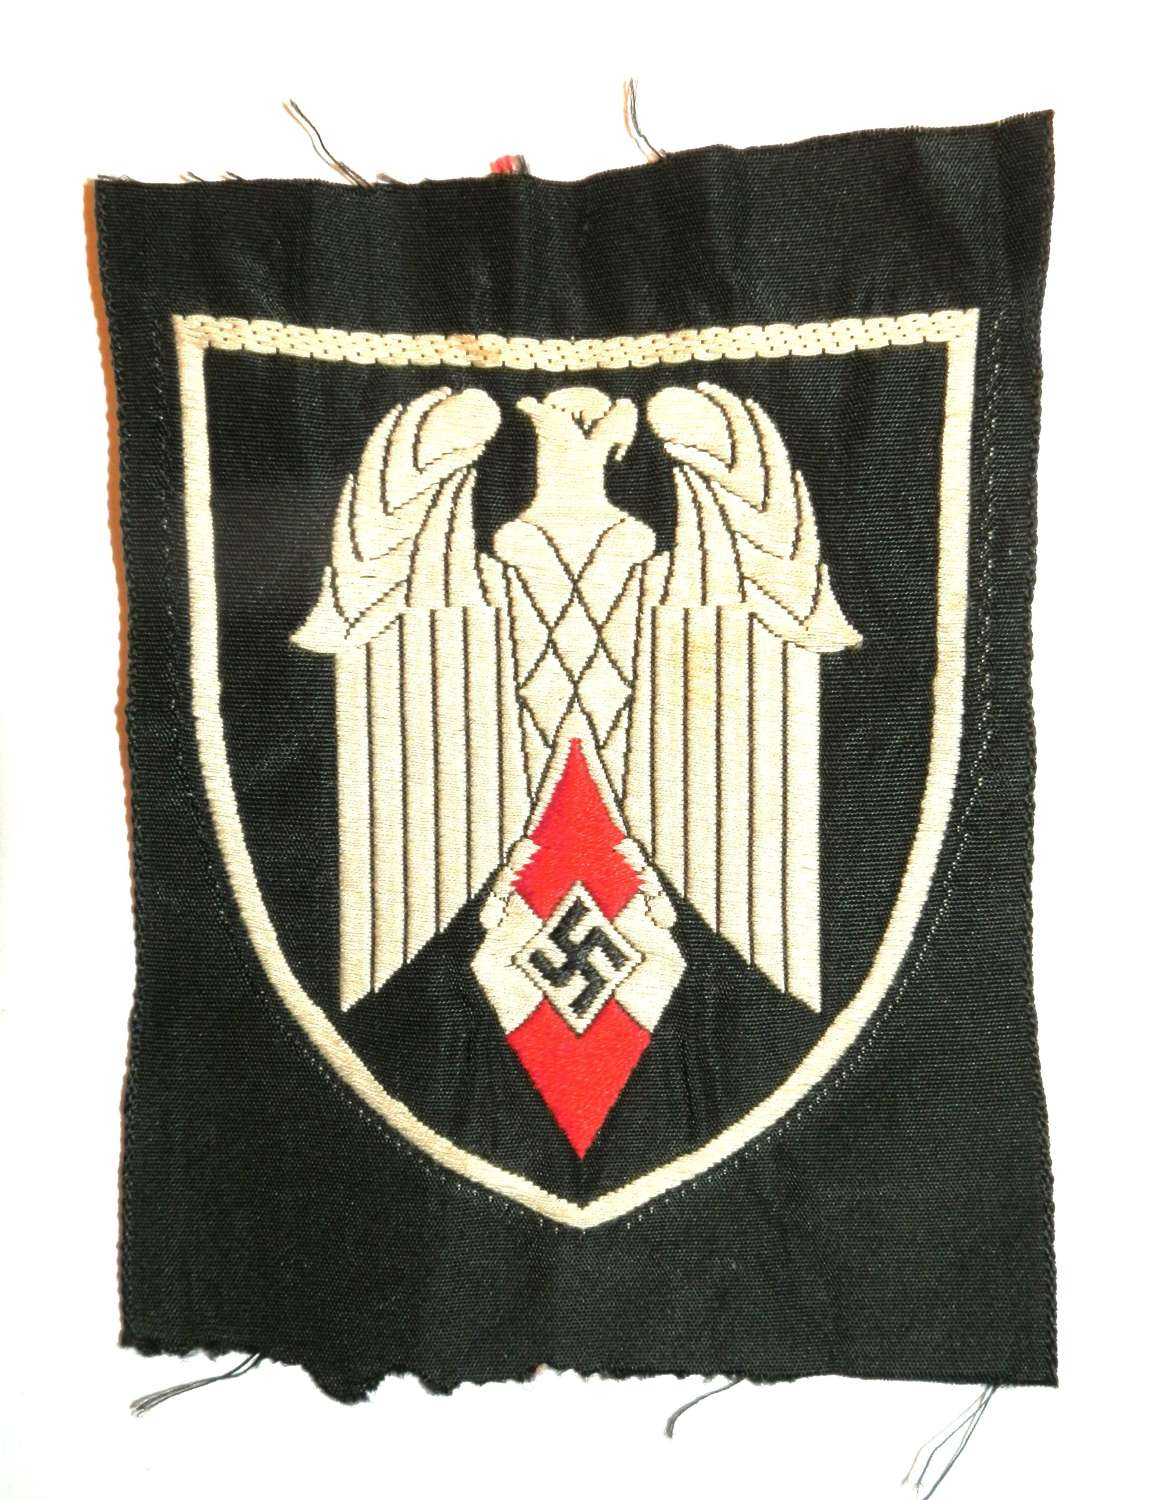 Hitler Youth (Hitlerjugend) Flag Bearers Insignia.